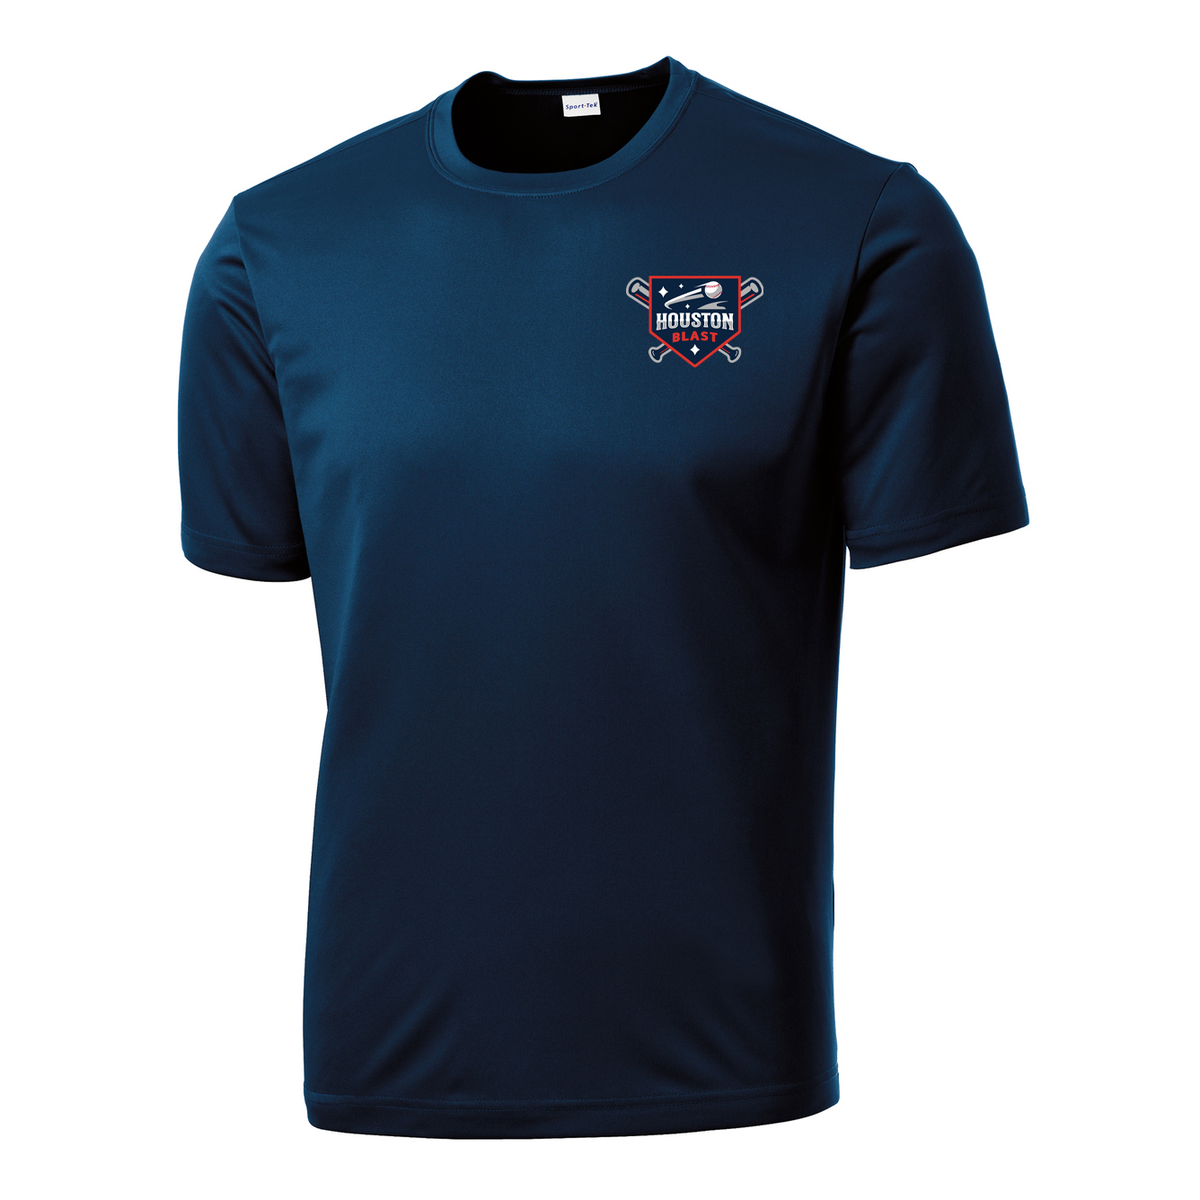 Houston Blast Baseball Performance T-Shirt